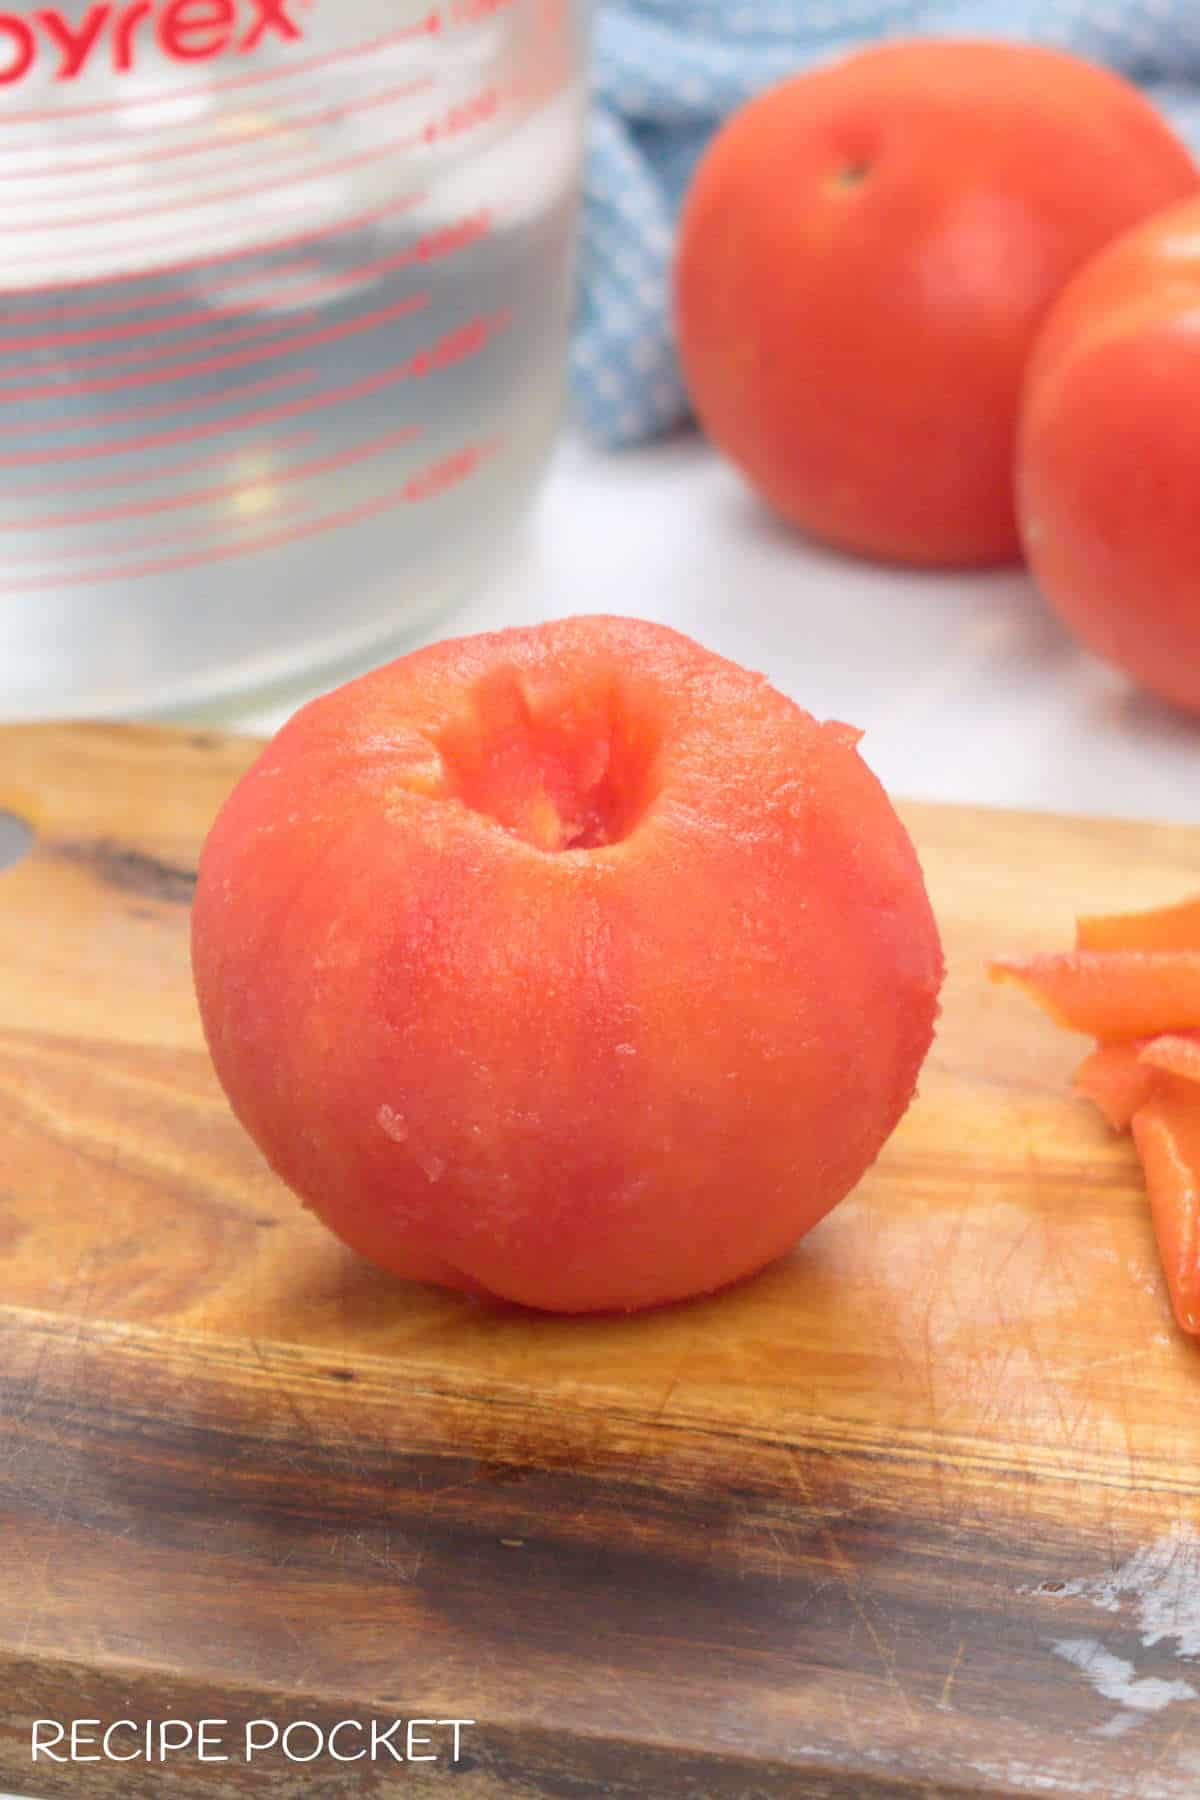 Main blog post image showing a peeled tomato.